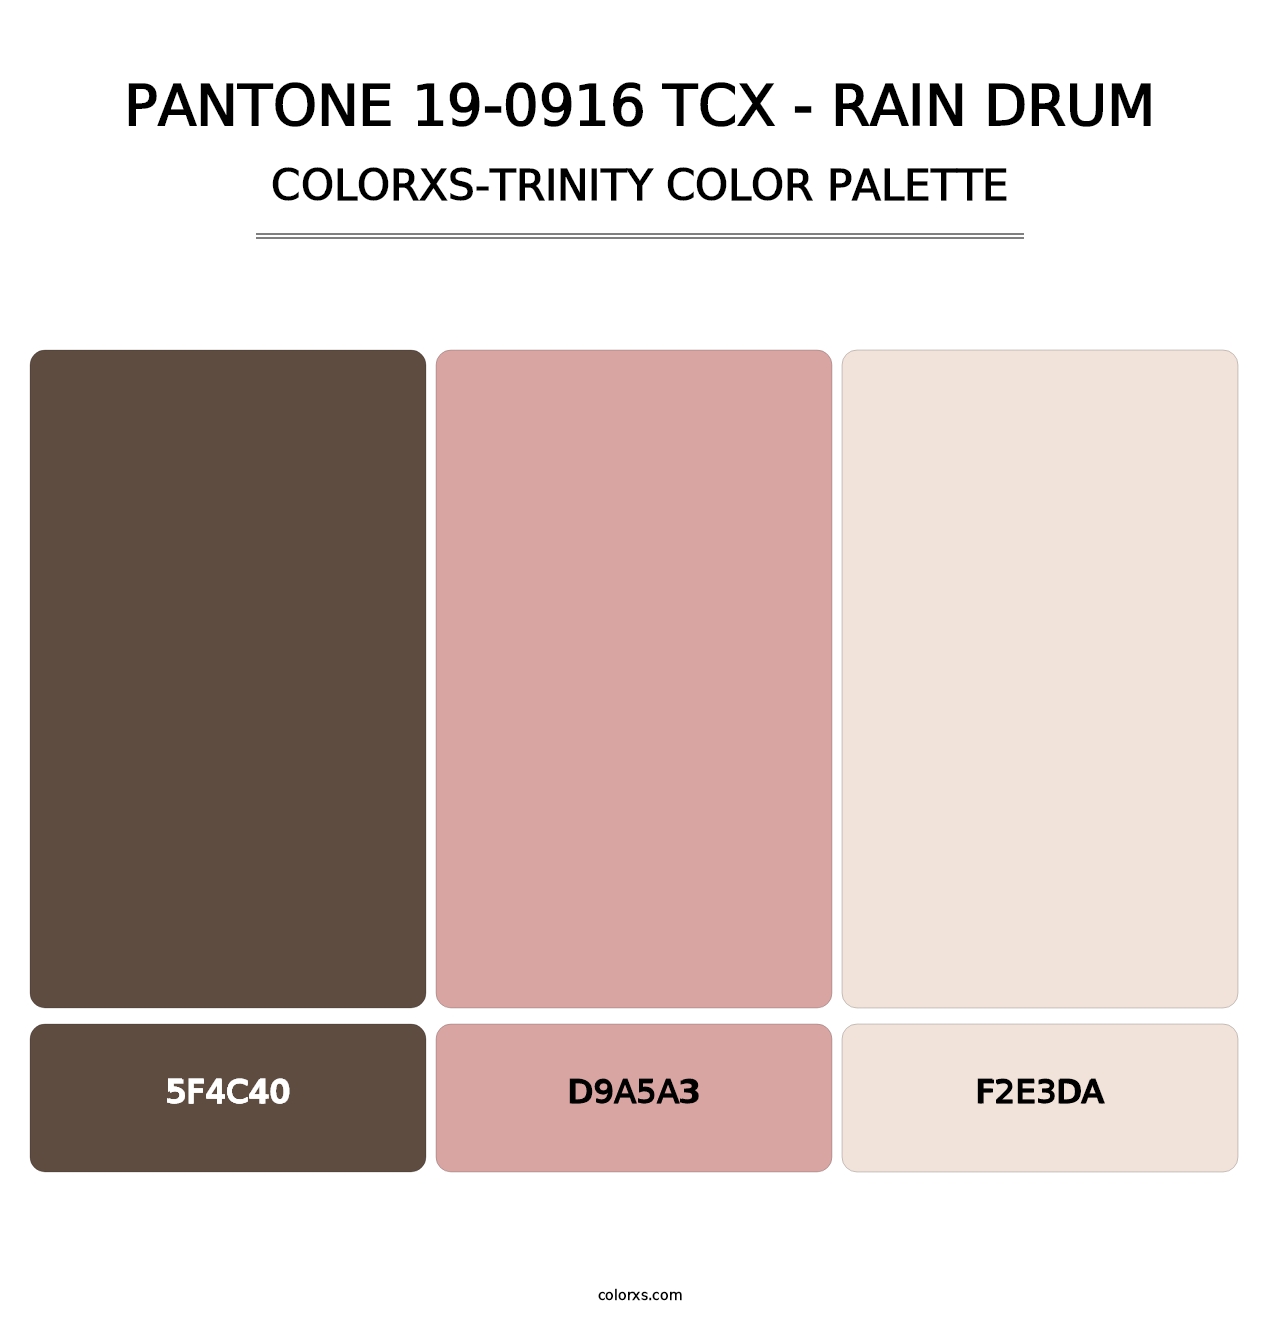 PANTONE 19-0916 TCX - Rain Drum - Colorxs Trinity Palette